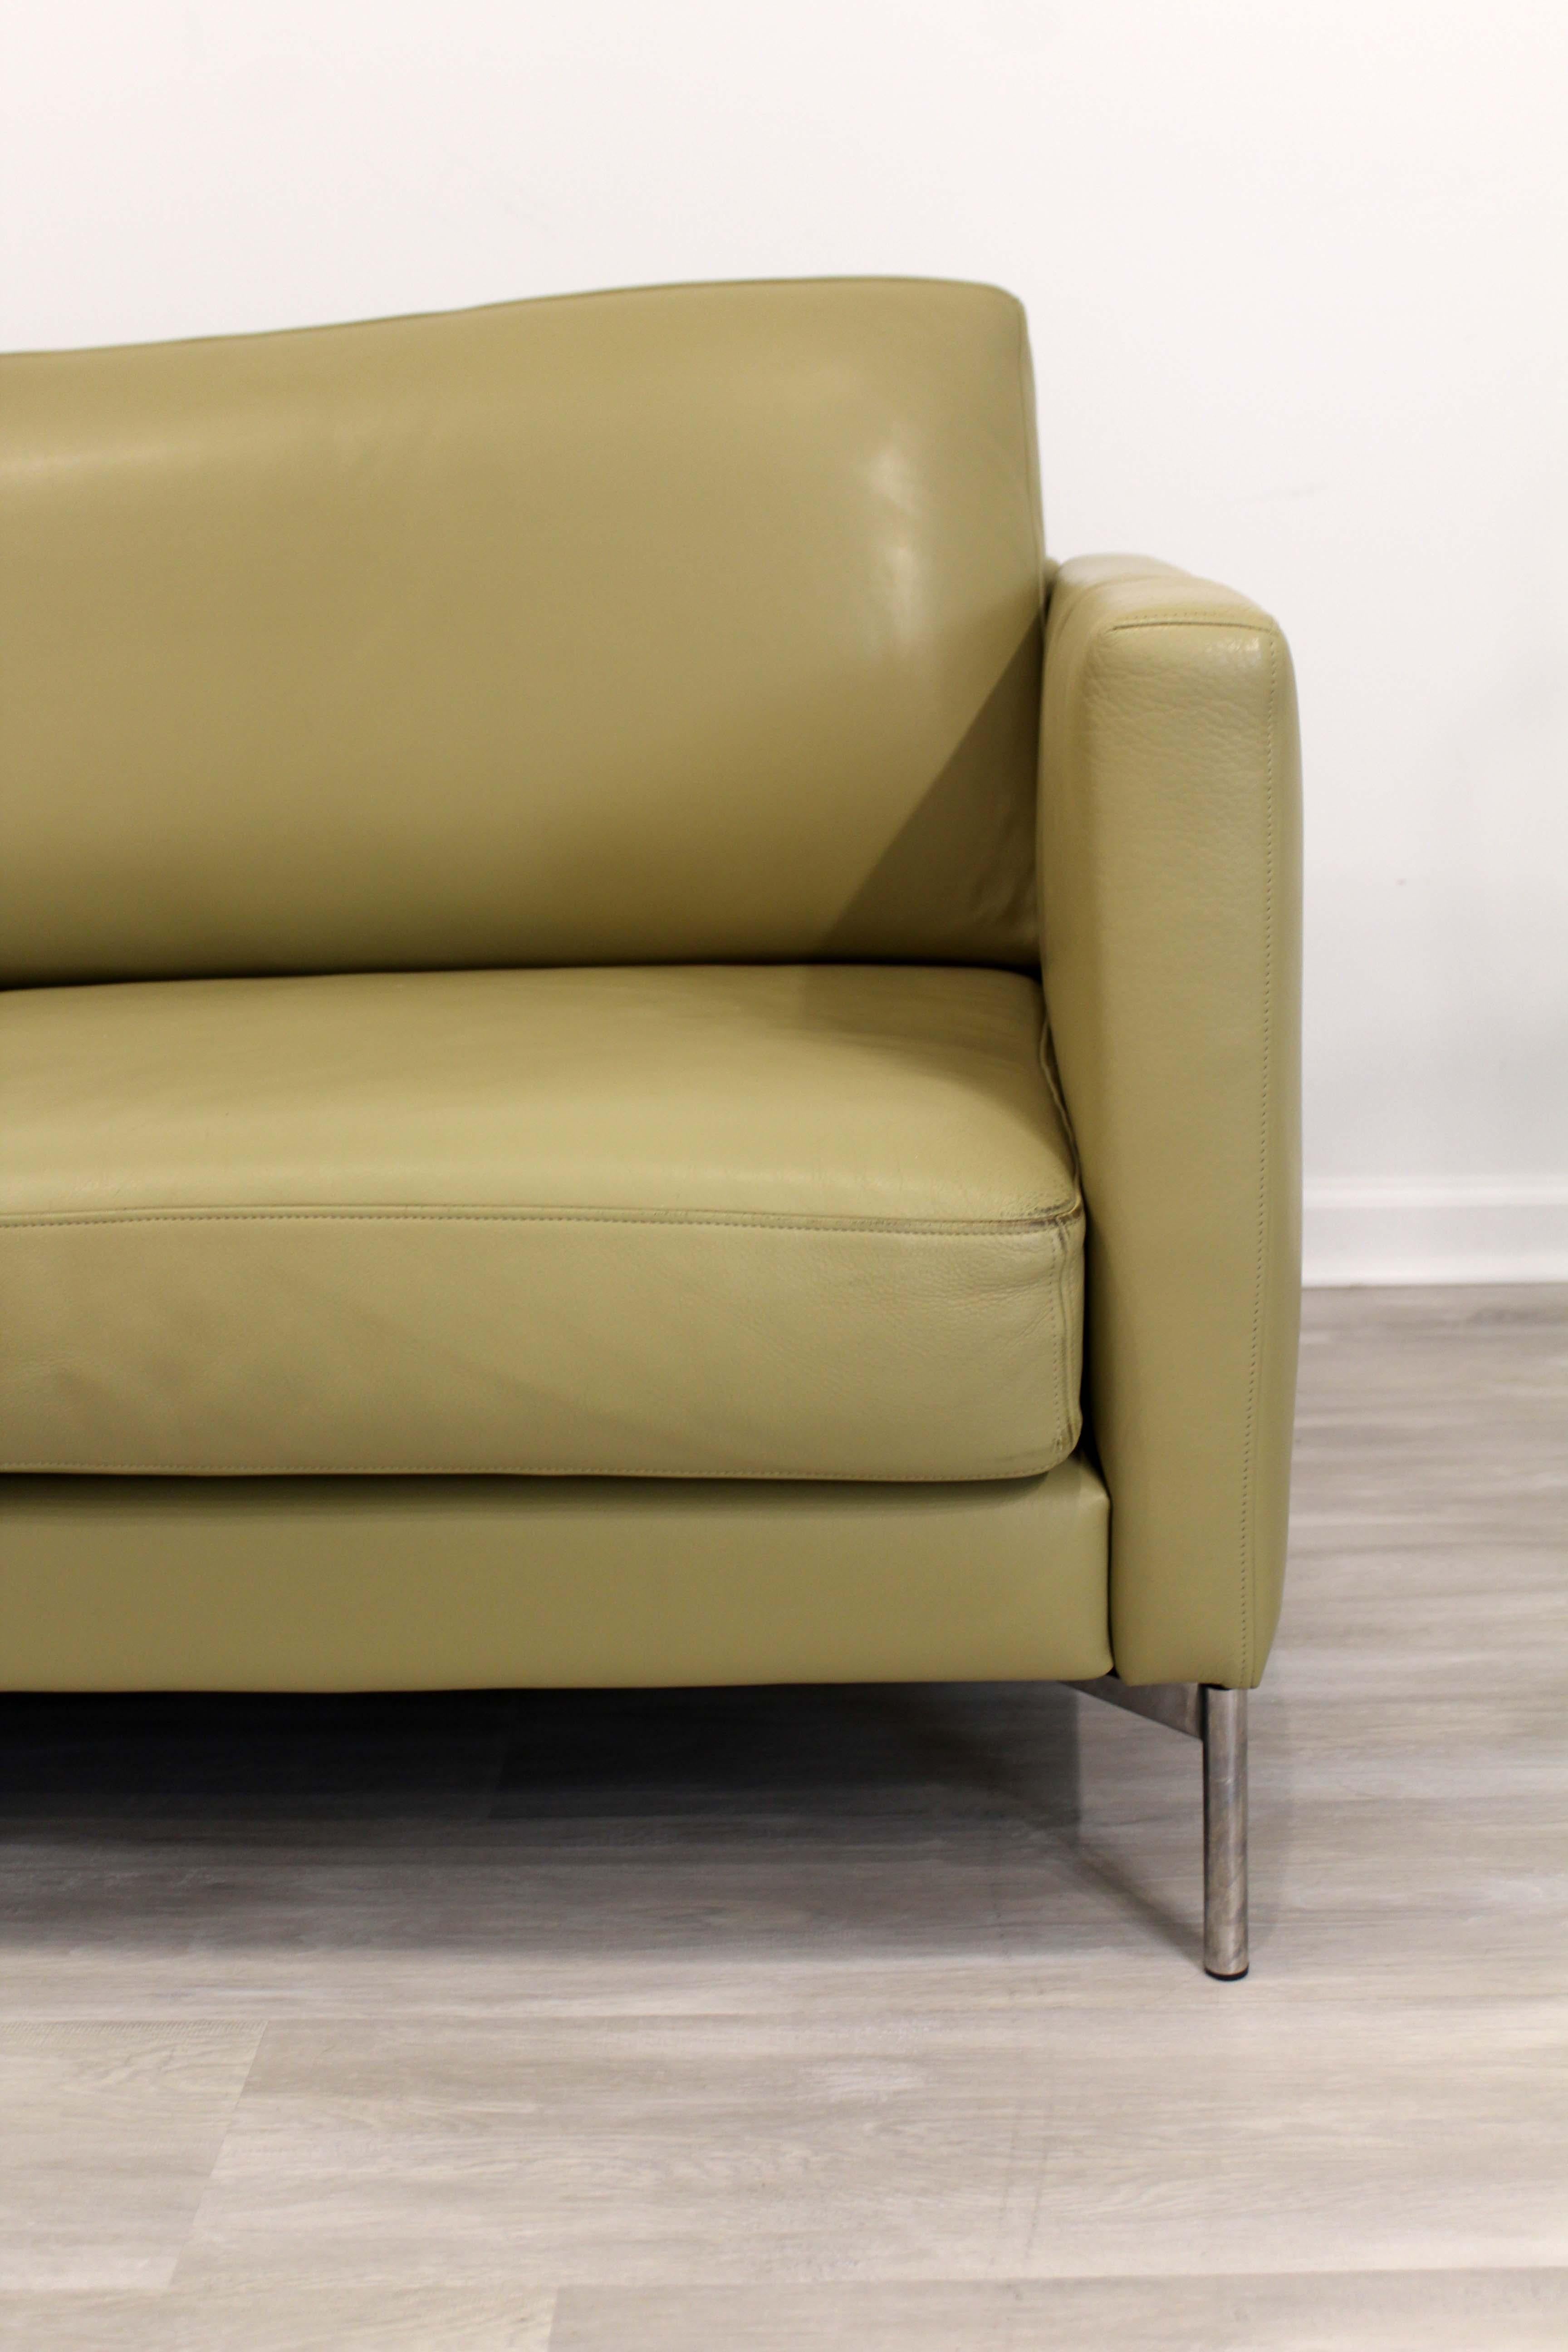 Modern Contemporary Knoll Divina Aniline Leather Sofa Designed by Piero Lissoni 1